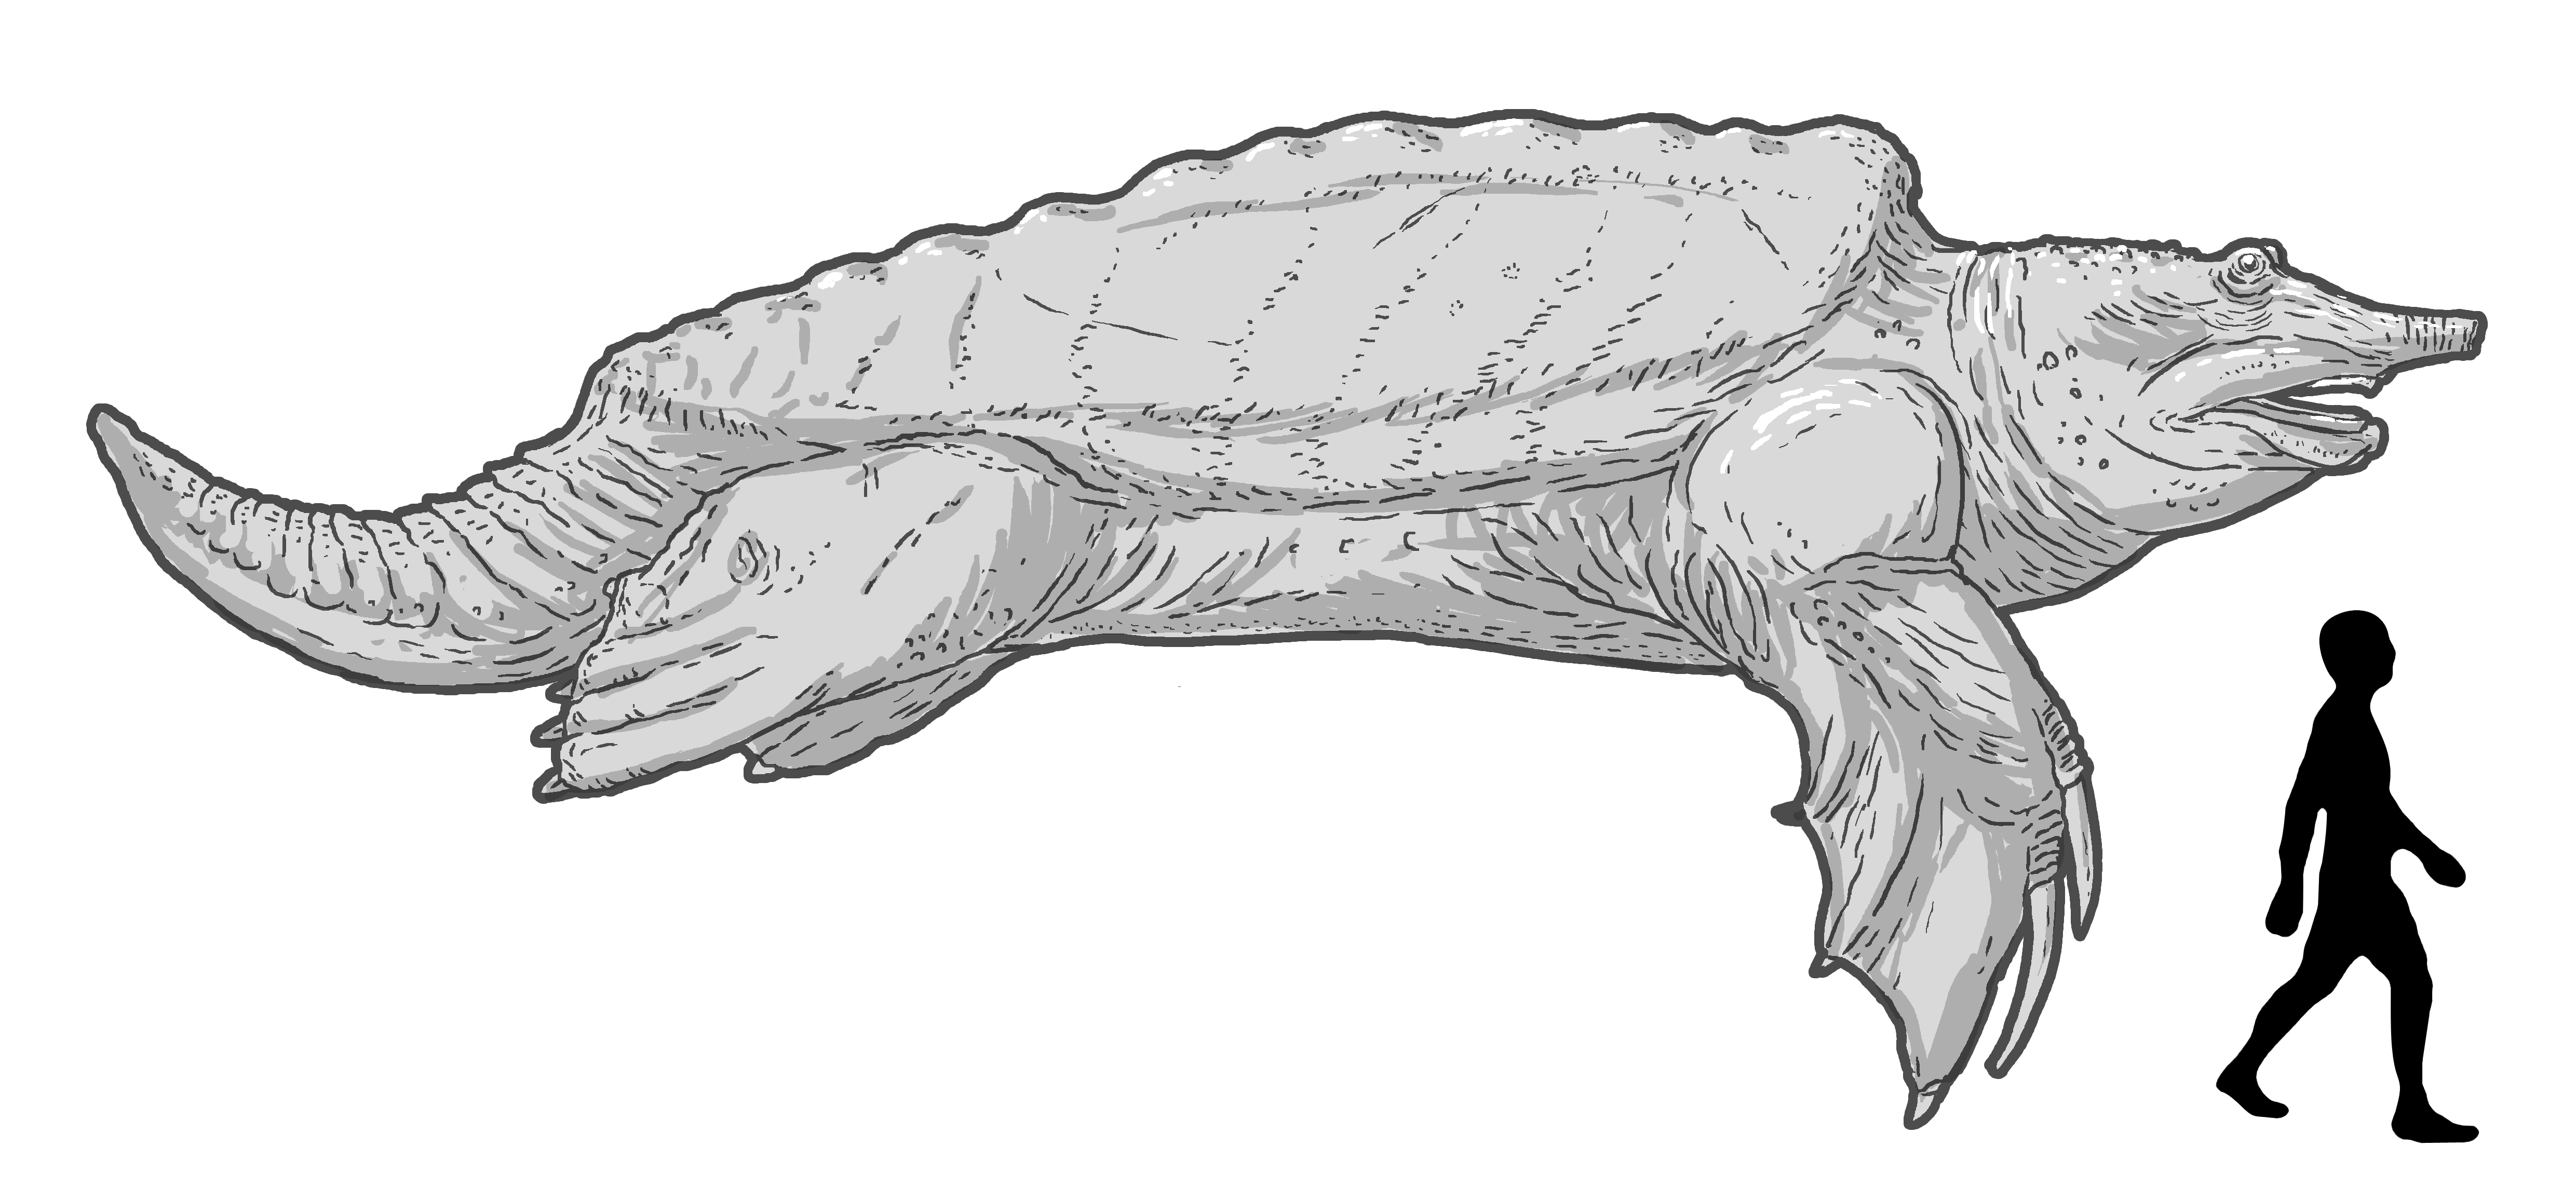 Therizinosaurus - The Turtle Beast